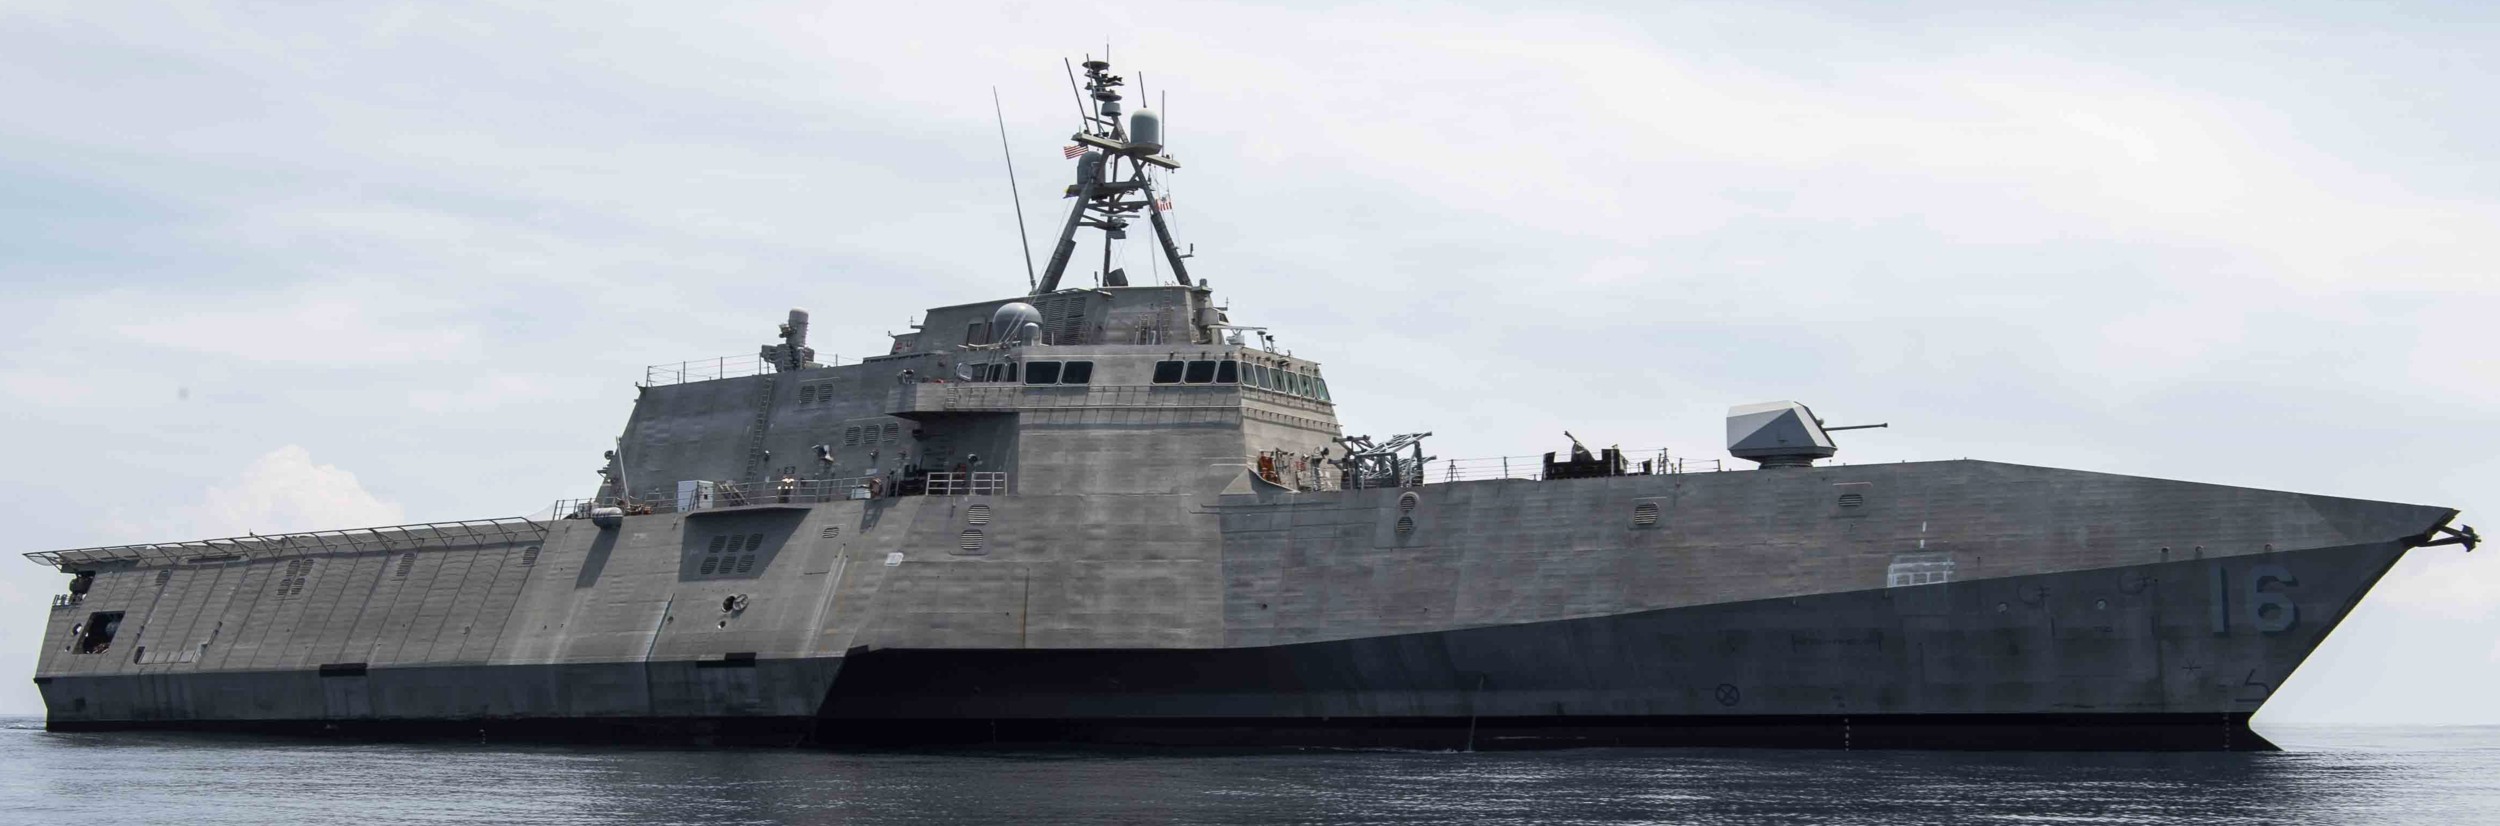 lcs-16 uss tulsa independence class littoral combat ship us navy pacific ocean 29